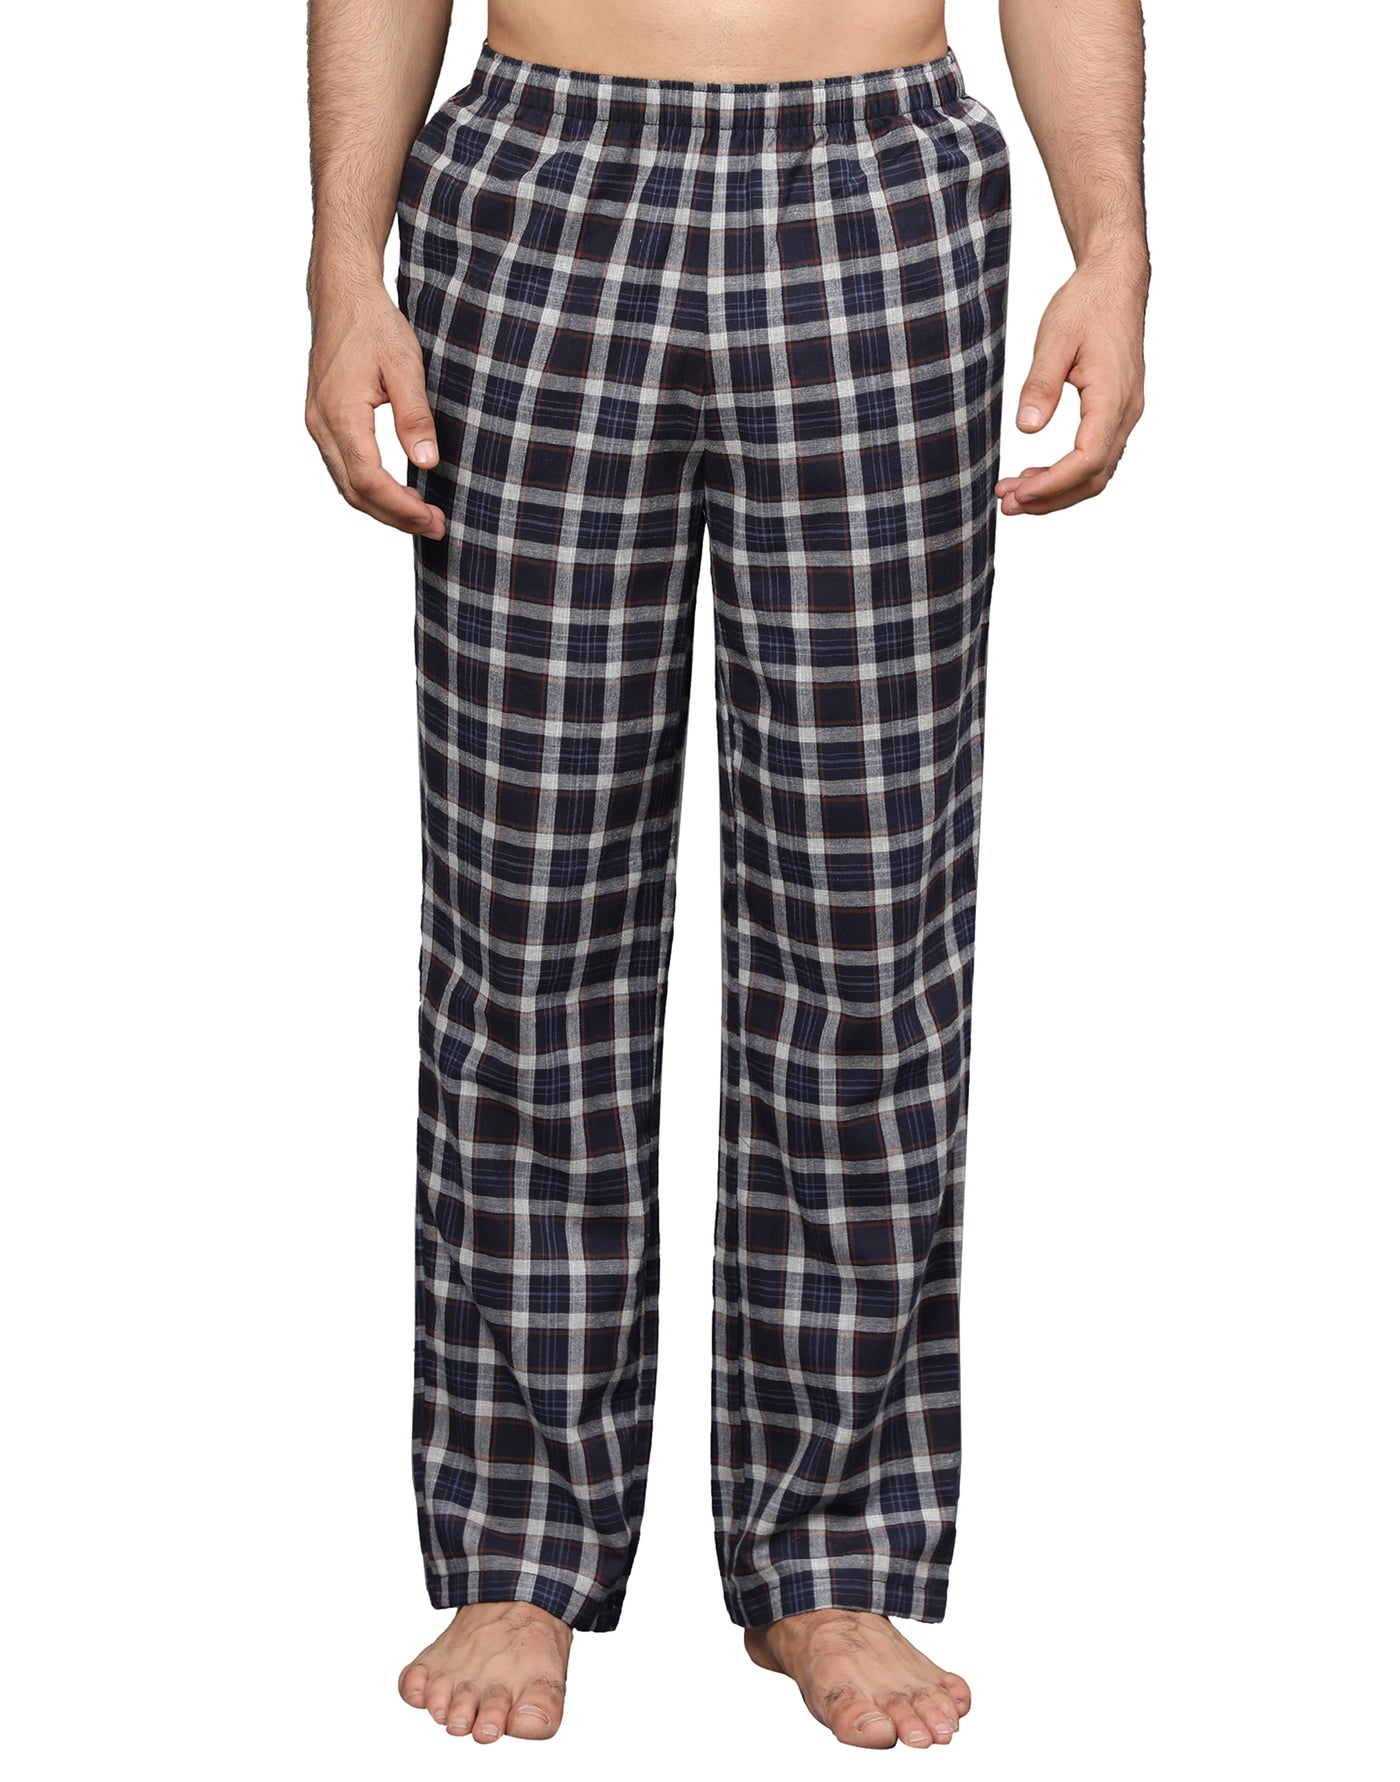 Pyjama Set for Men-Navy & Black Checked